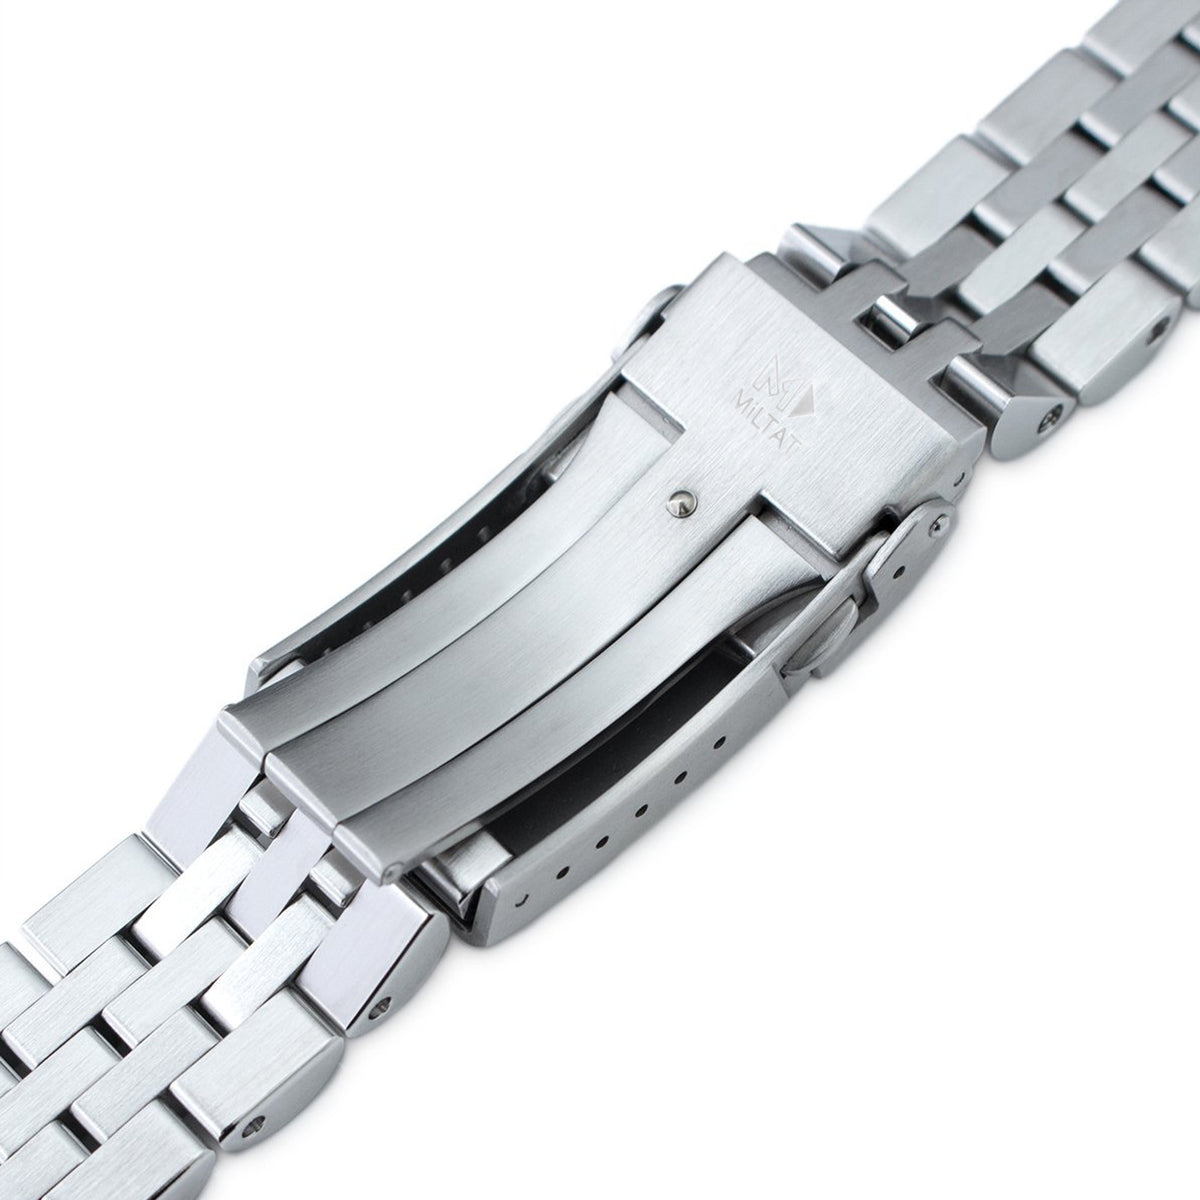 Steel watch band. Stainless Steel 316l браслет. Seiko 5 металлический ремешок. Ремешок Seiko 20mm. Страпкод браслет для Seiko.